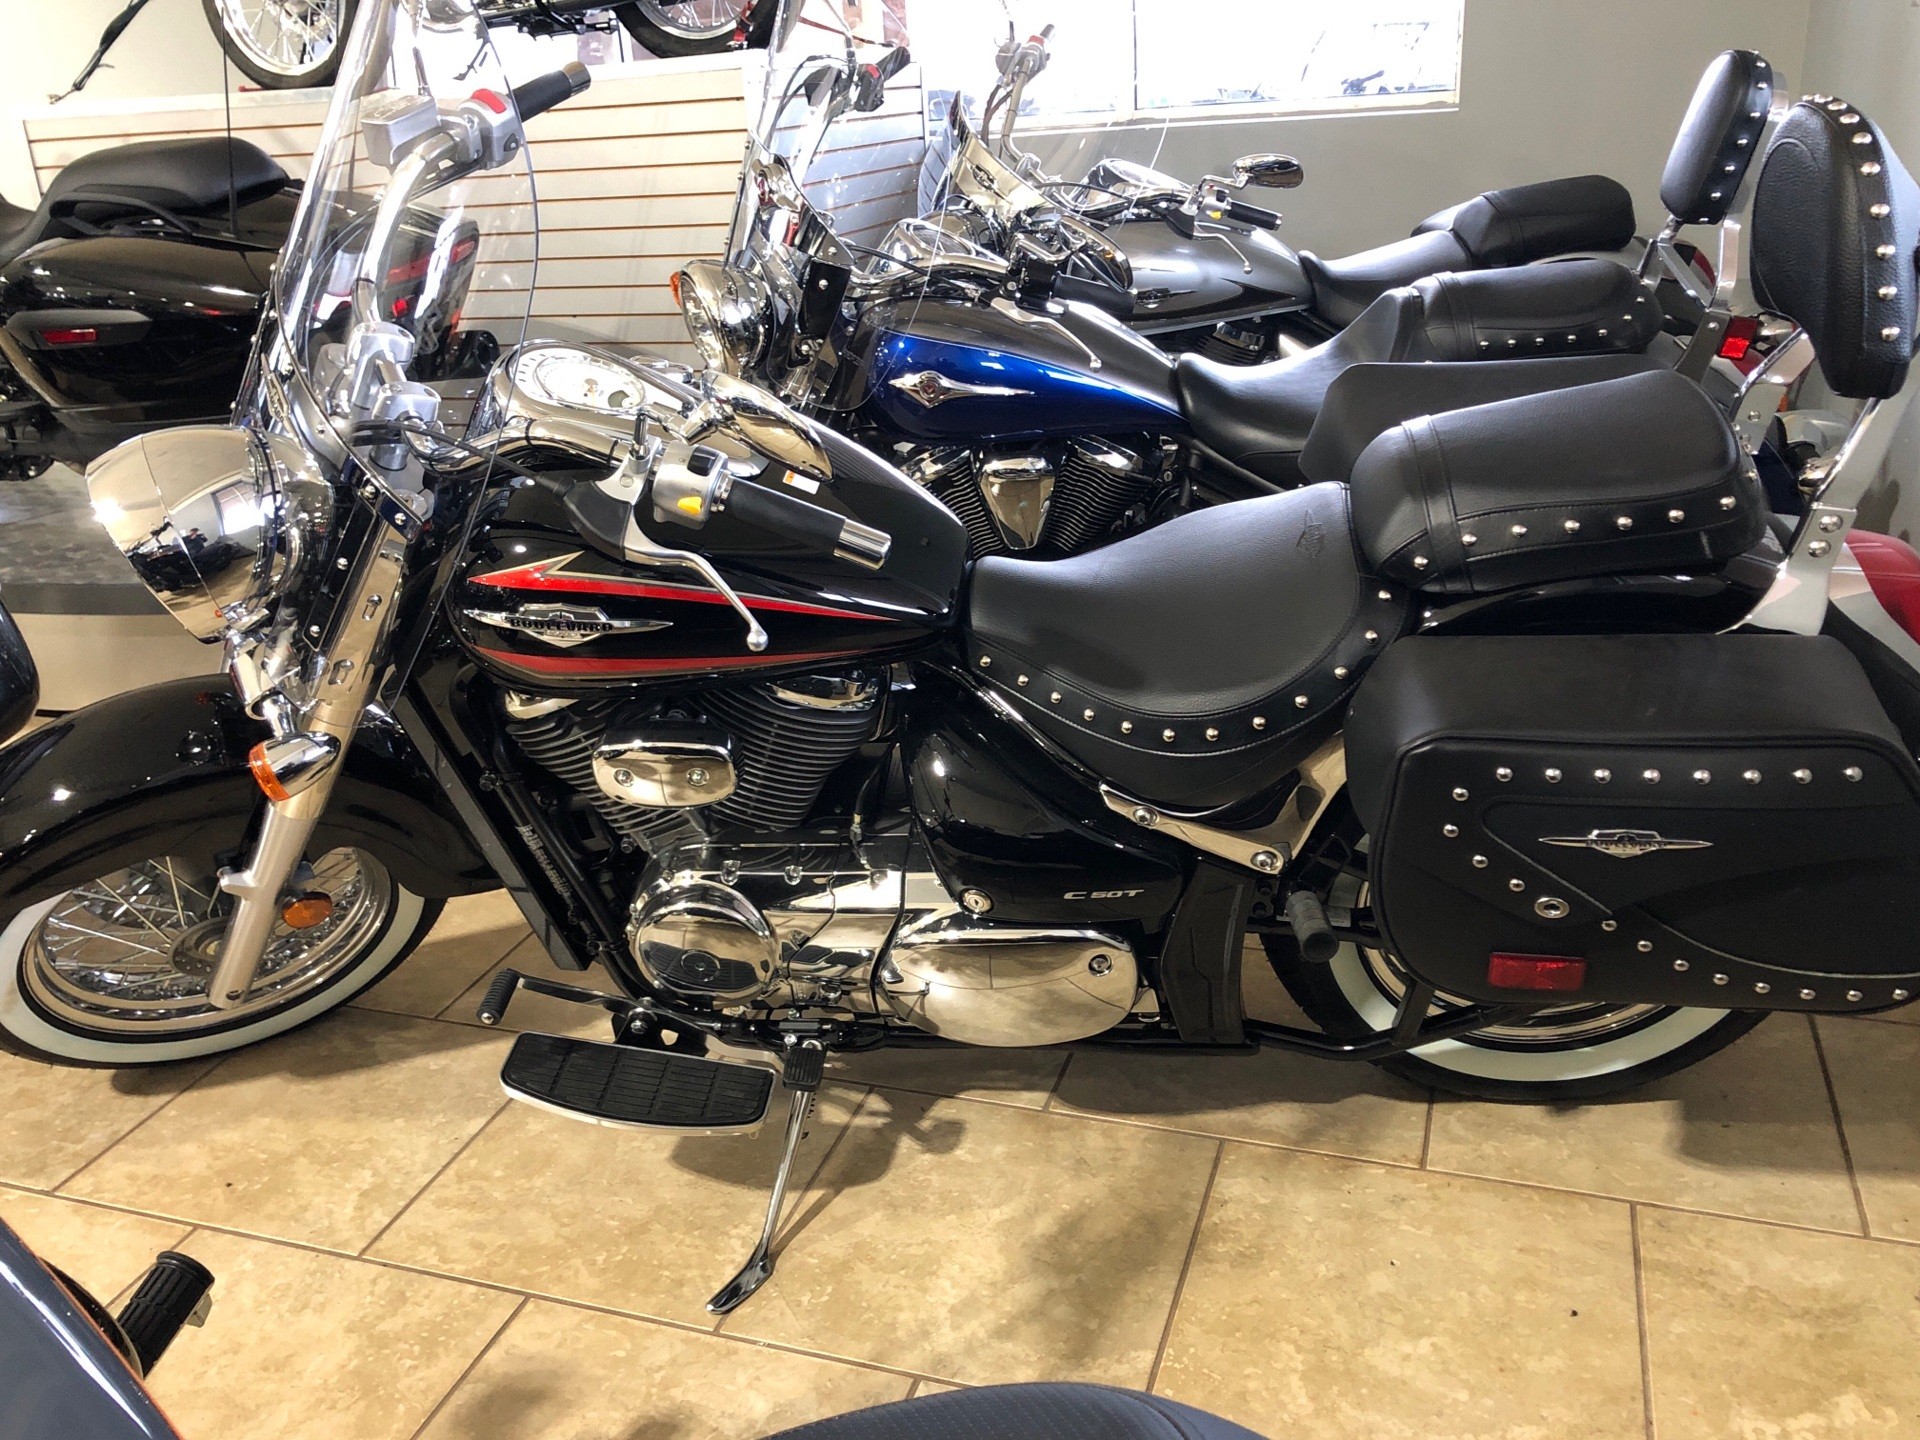 New 2019 Suzuki Boulevard C50 Motorcycles In Rogers Ar Ms100515 Glass Sparkle Black